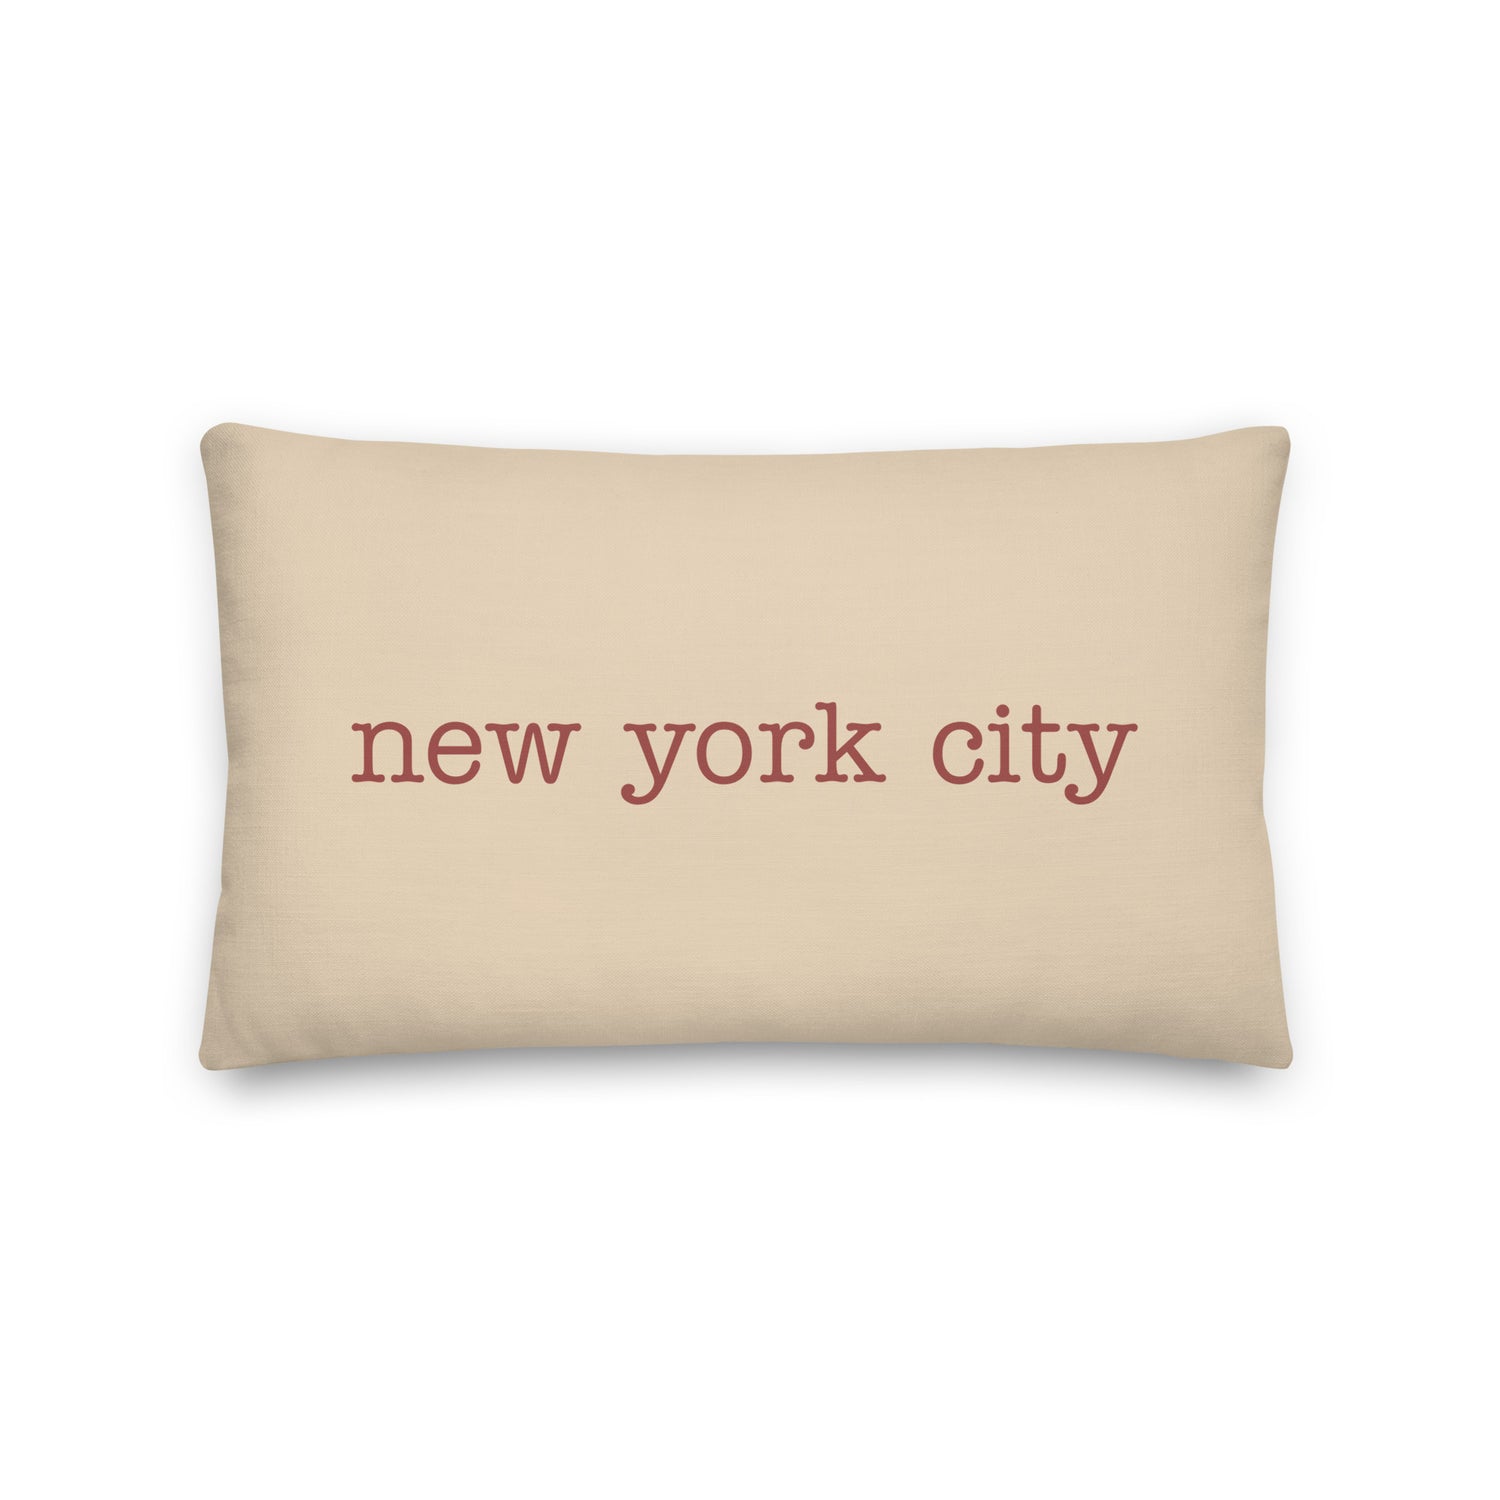 New York City New York Pillows and Blankets • JFK Airport Code